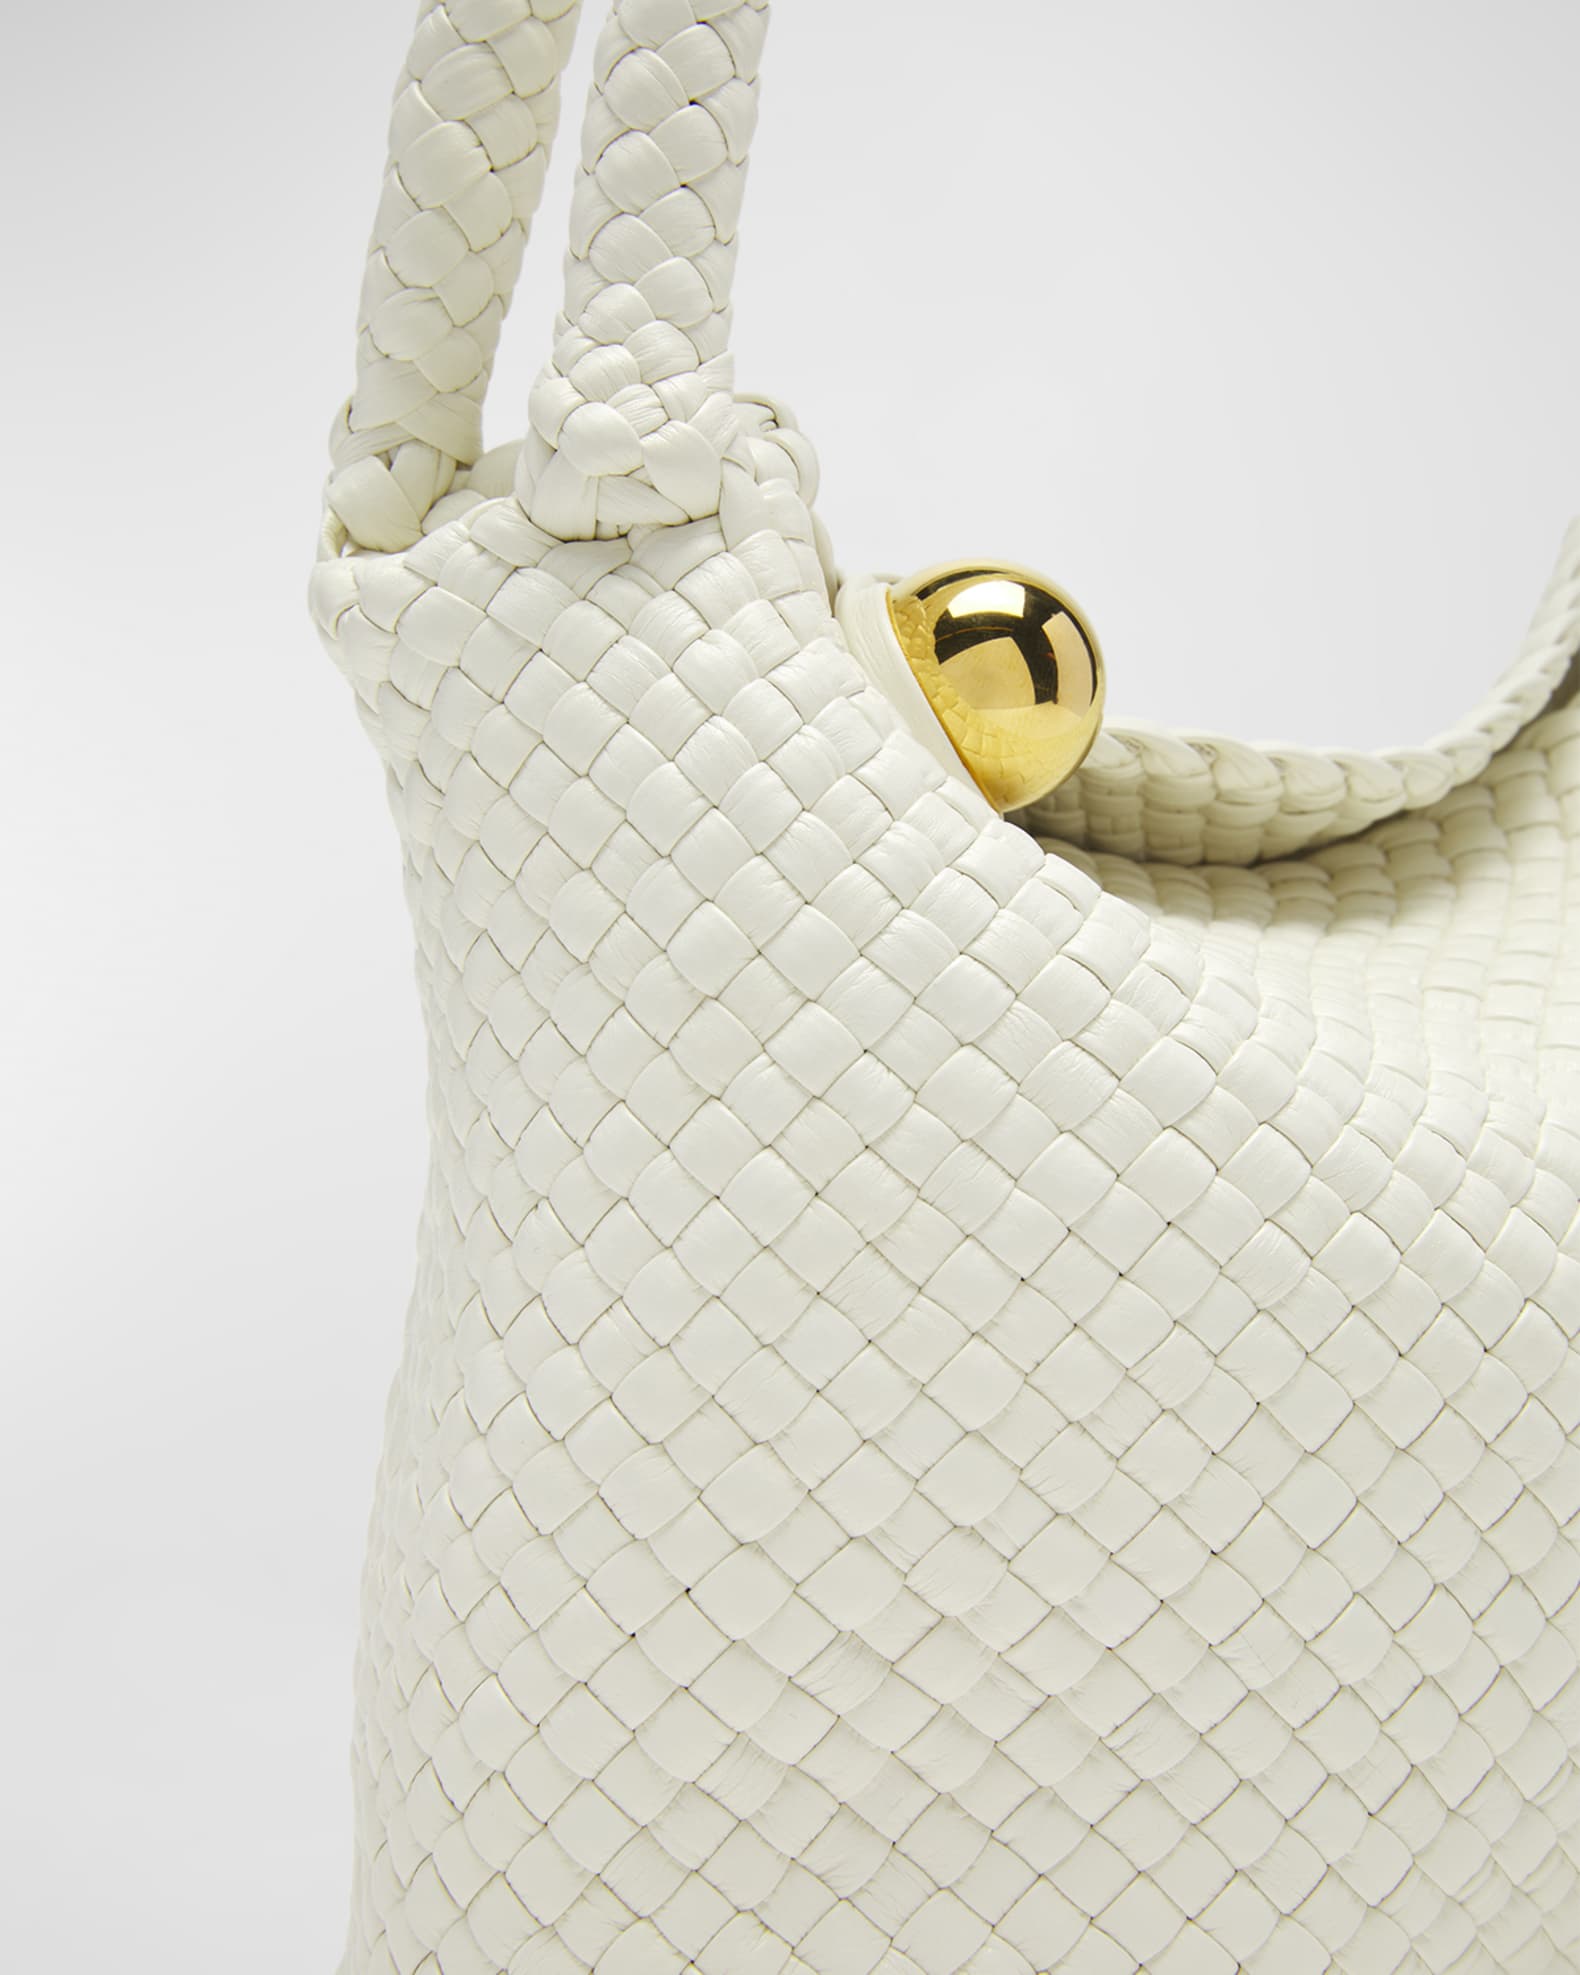 Fashion Look Featuring Bottega Veneta Hobo Bags and Bottega Veneta Shoulder  Bags by THESTYLEGUISE - ShopStyle